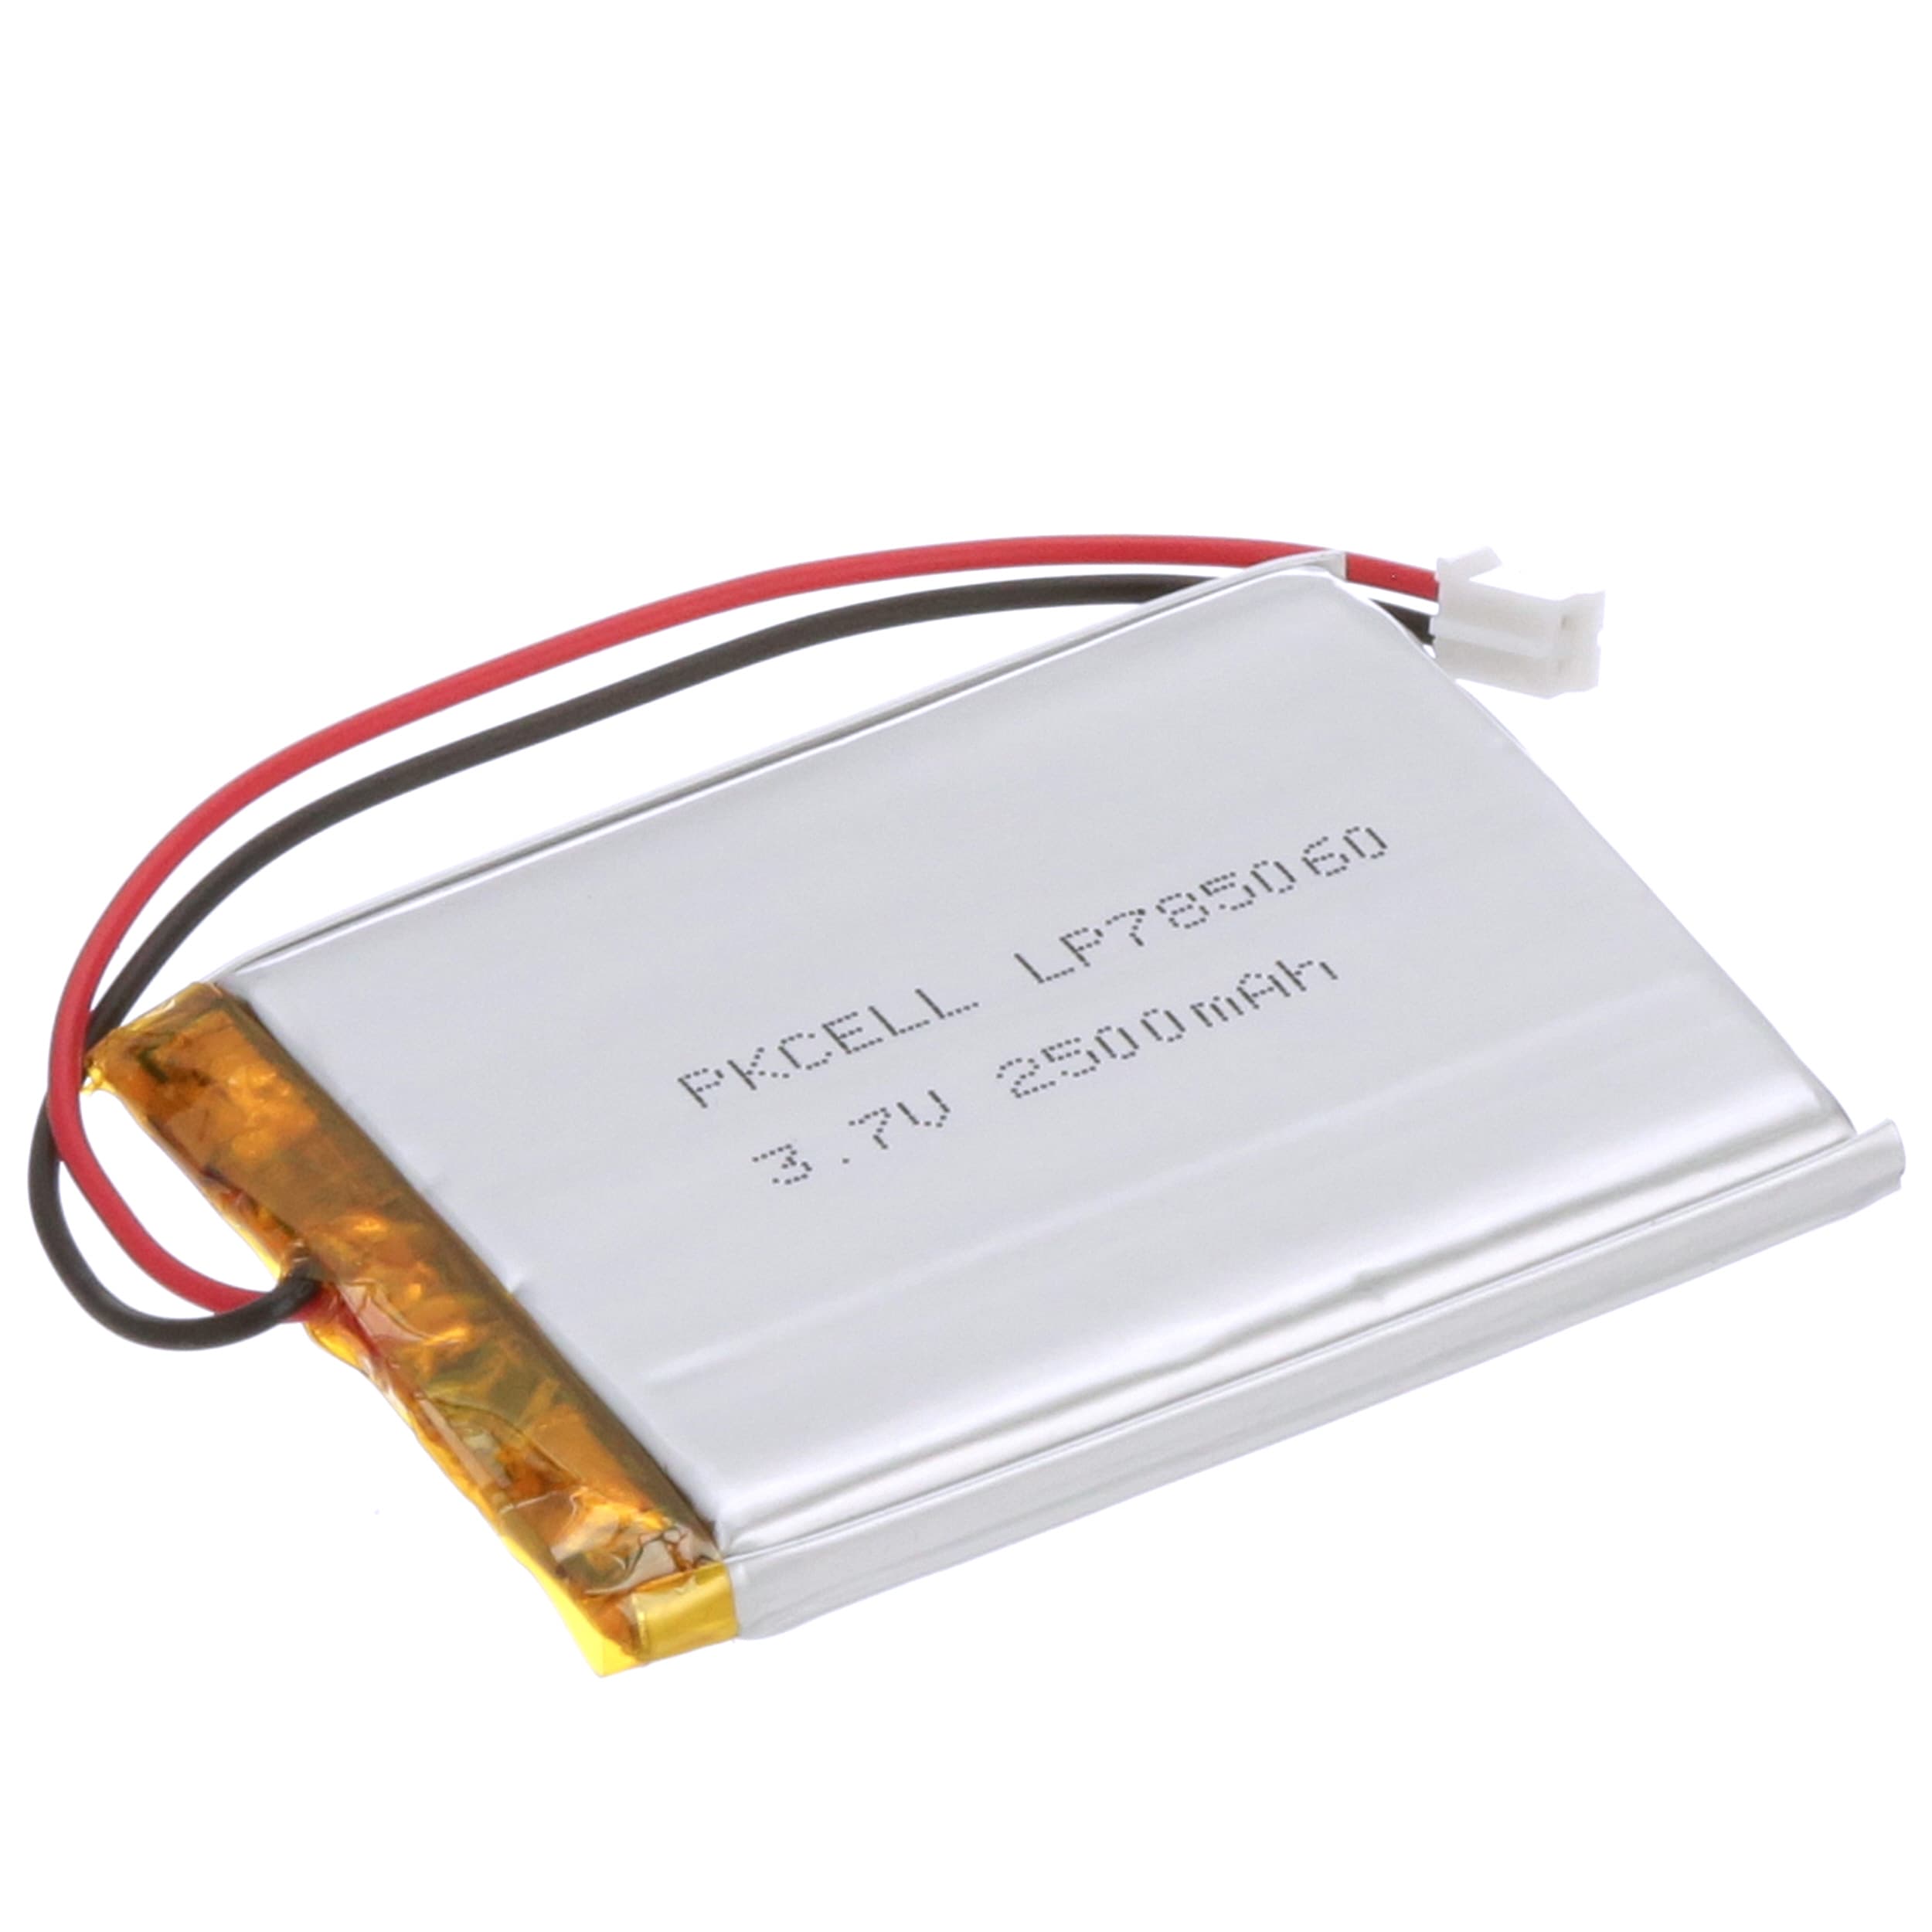 Lithium Ion Polymer Battery - 3.7v 100mAh : ID 1570 : $5.95